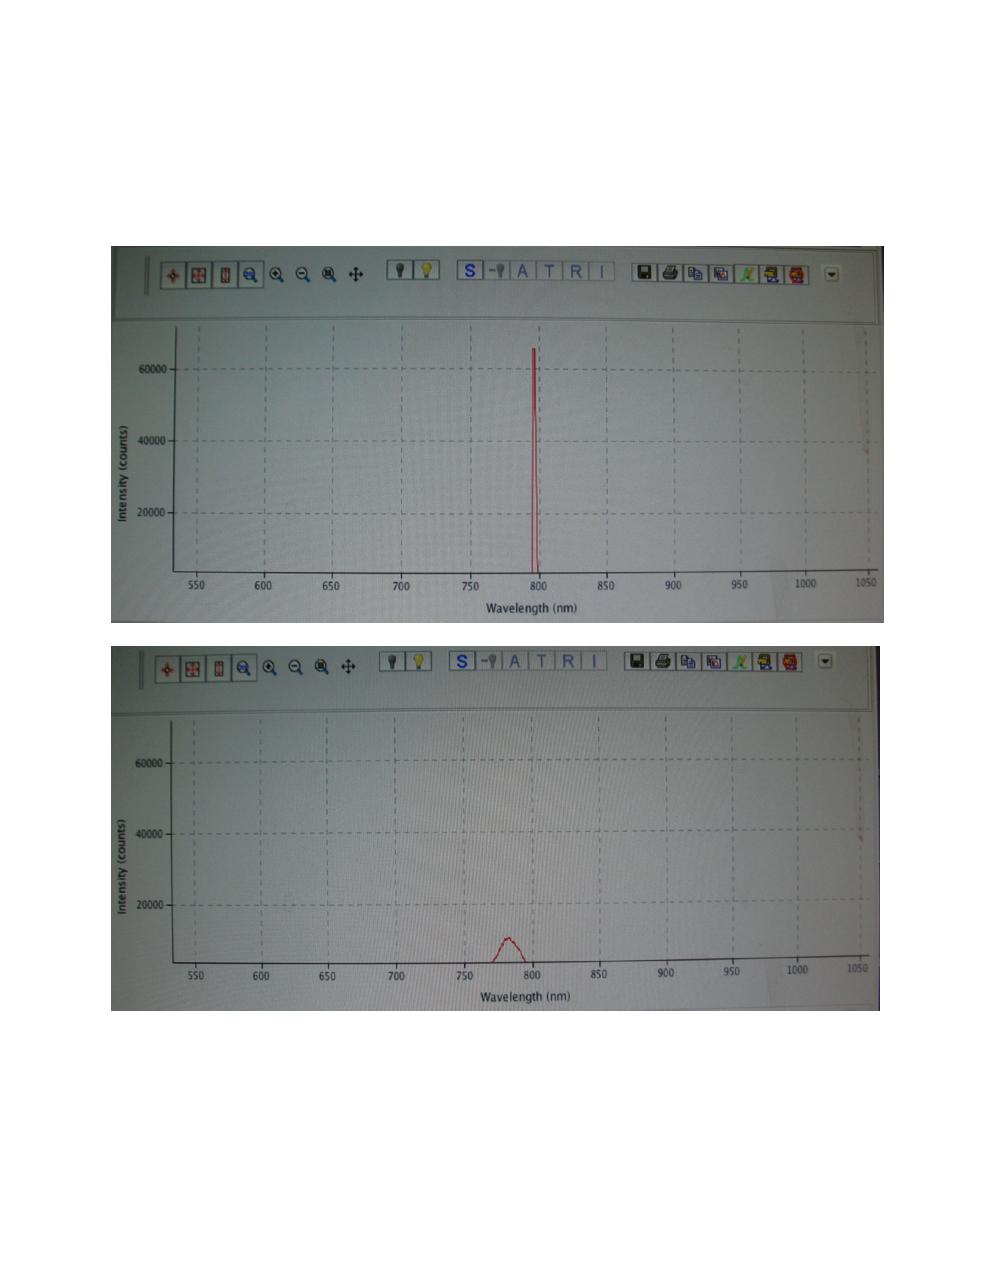 Figure 2 Laser mode-locking. (Top) Laser not mode-locked. Intensity distribution is peaked. (Bottom) Mode-locked laser displaying significantly broadened intensity distribution.